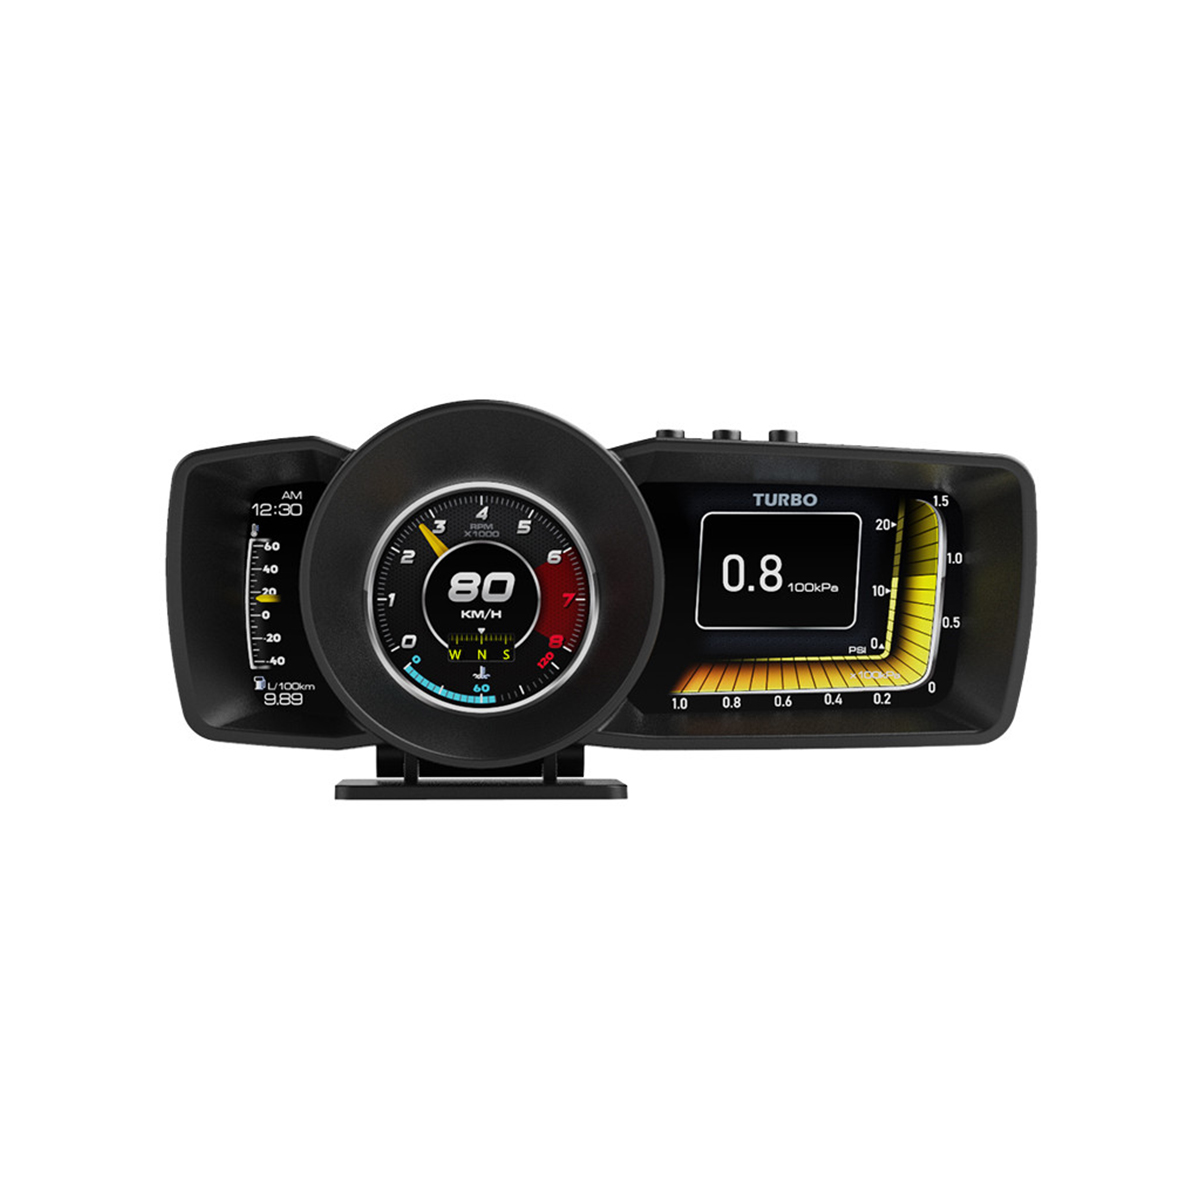 Auto Car OBD2 Digital HUD Head Up Display Oil Water Temp Multi Gauge Speed Alarm